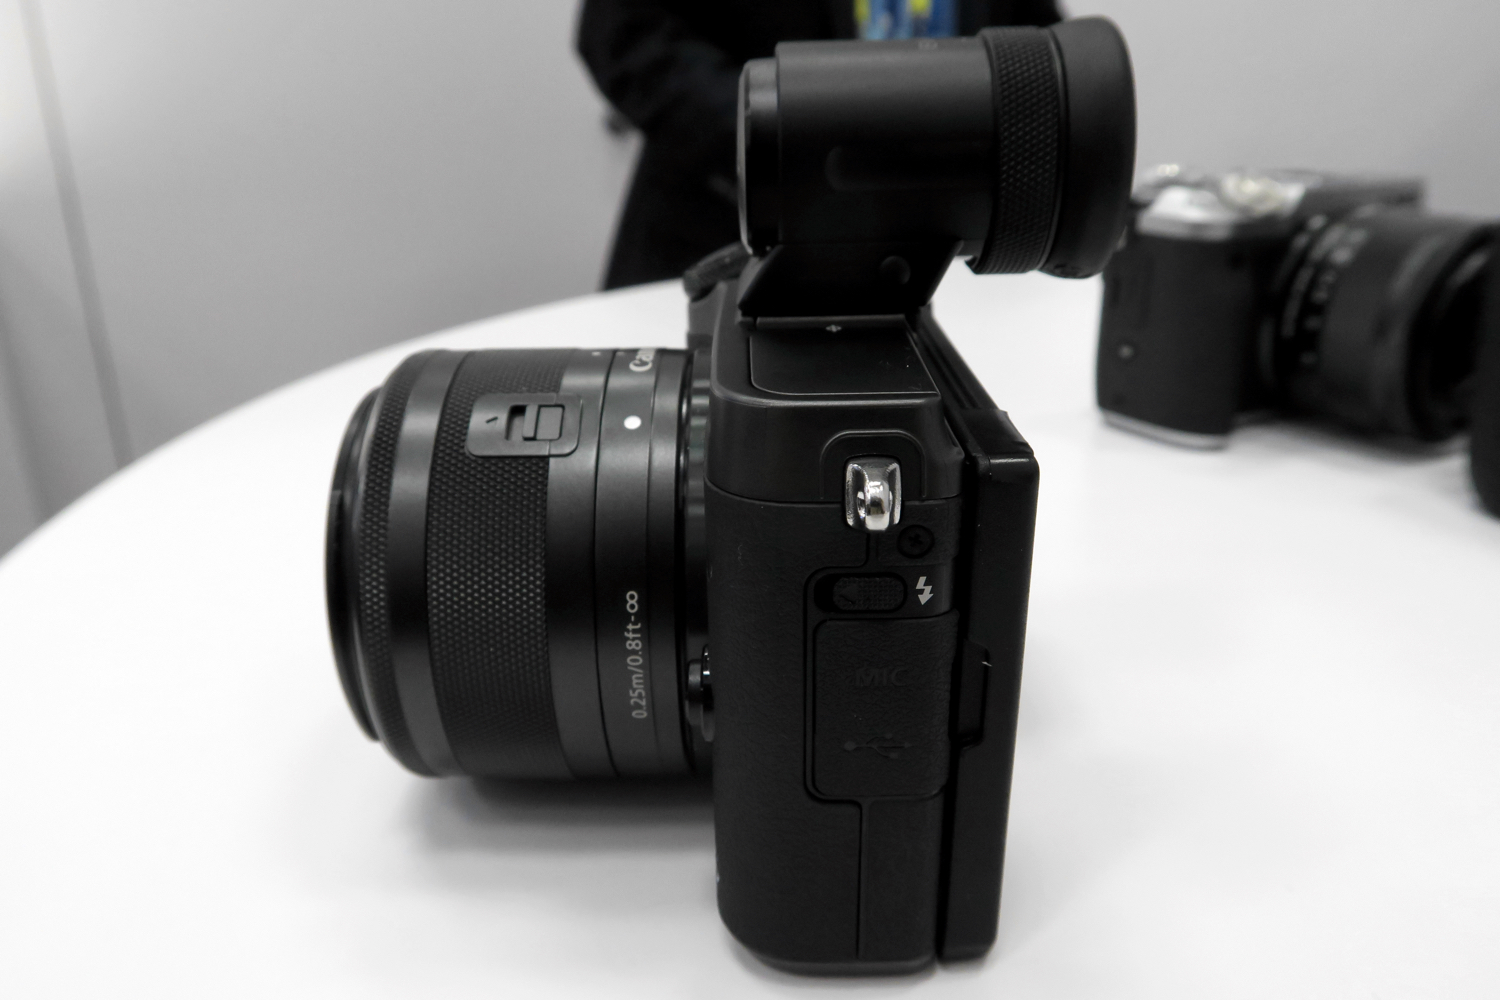 canon eos m6 announced cameras feb 2017 12